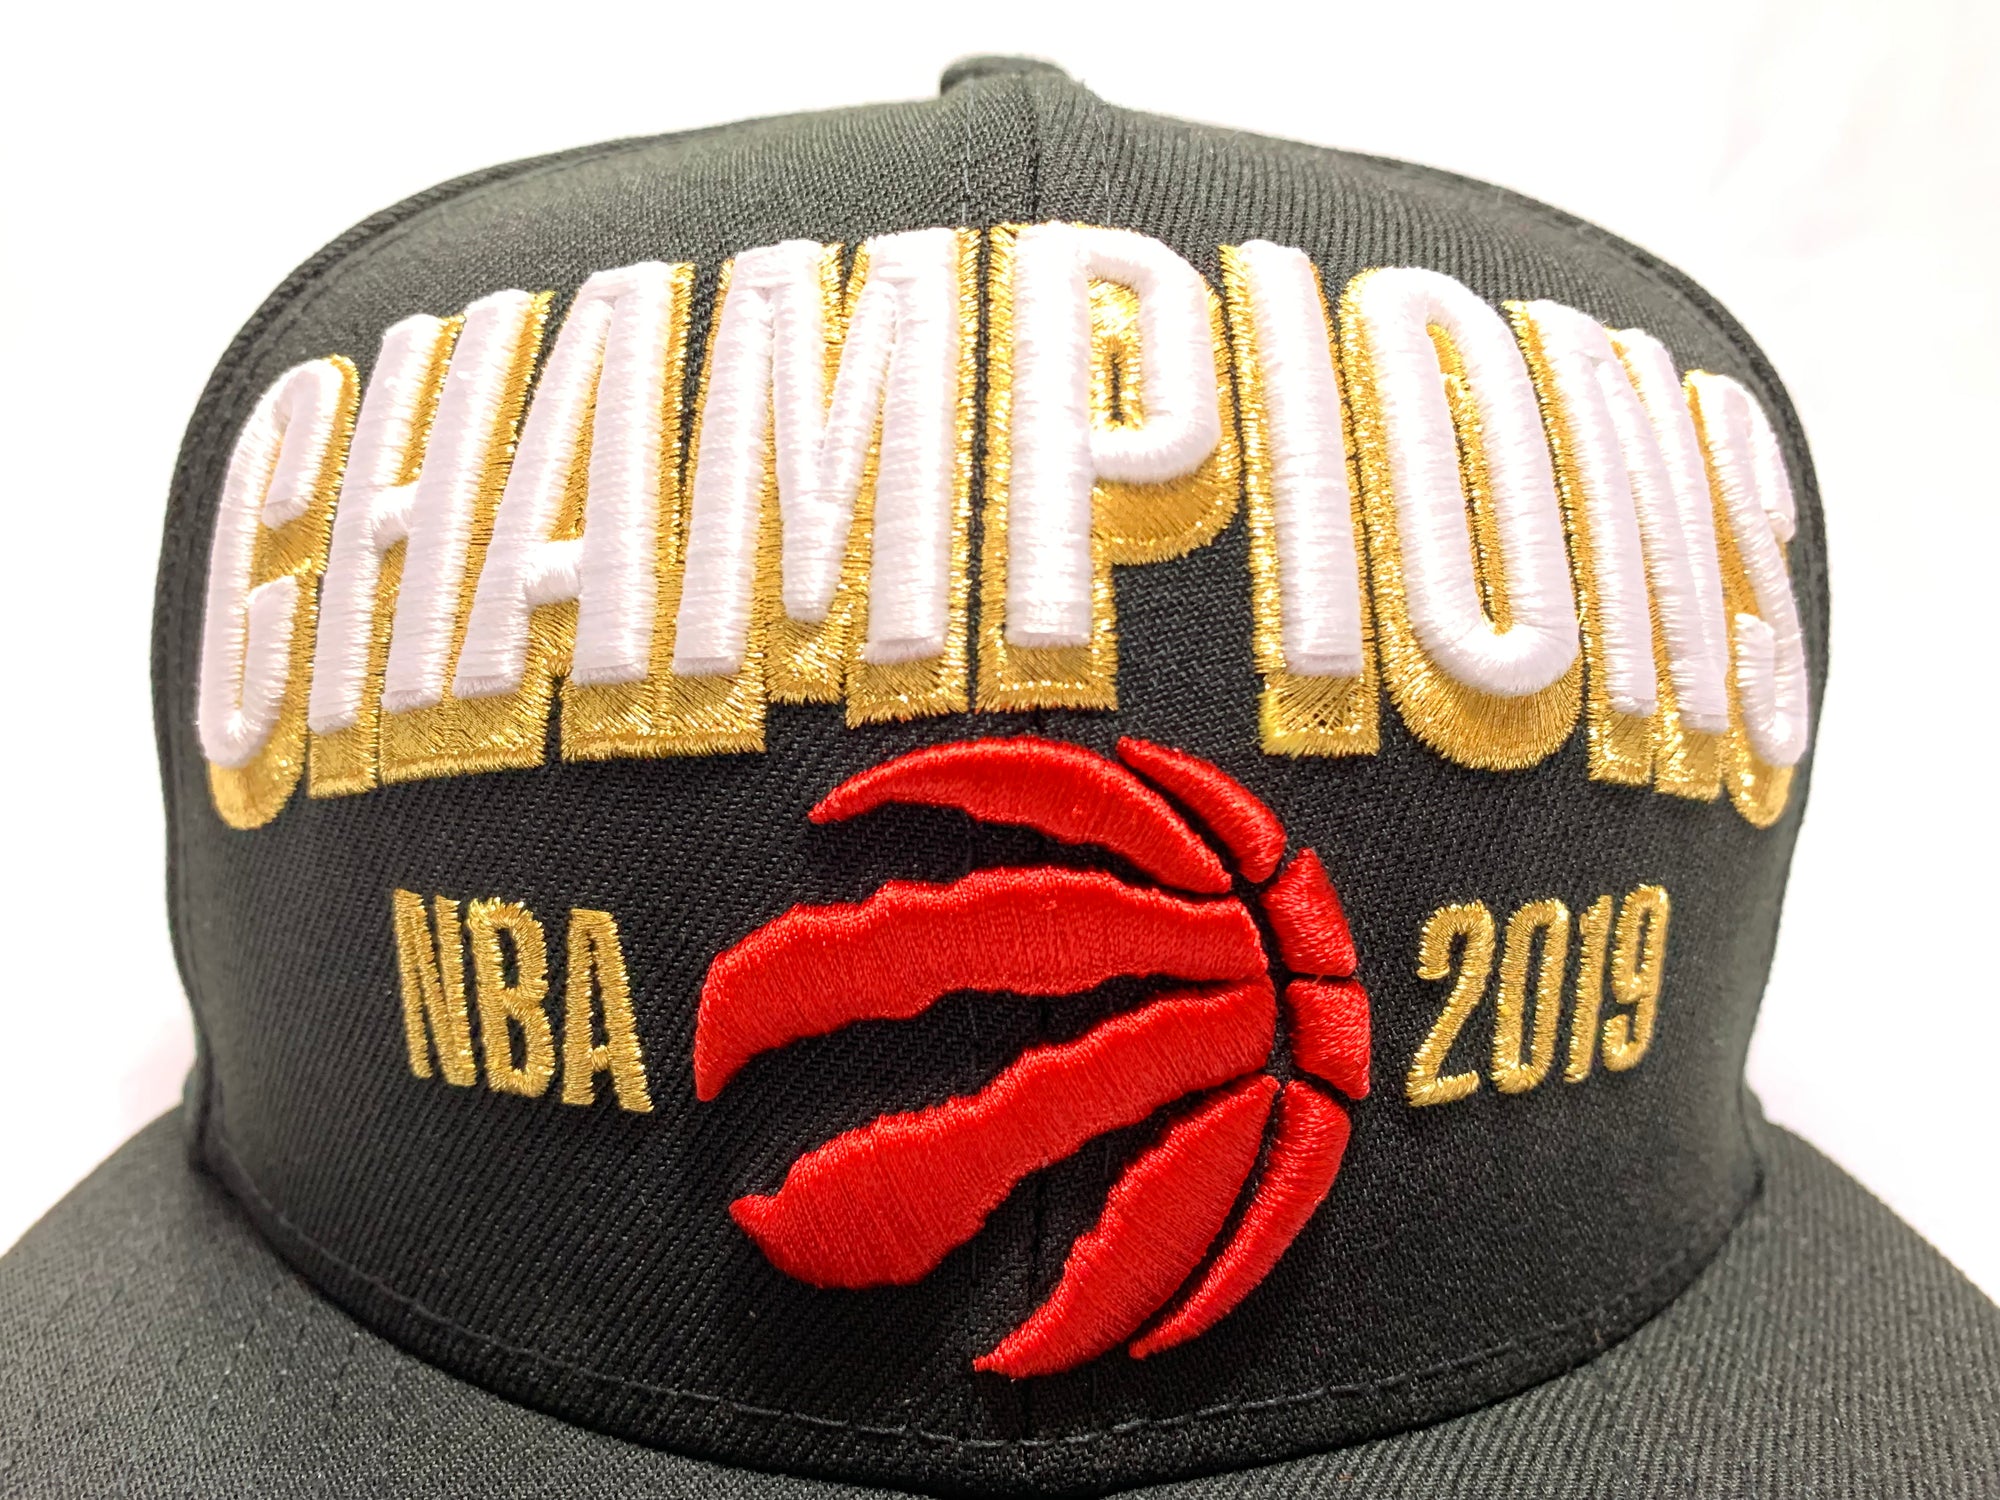 Toronto Raptors 2019 Women's NBA Championship Locker Room shirt by  Nike L